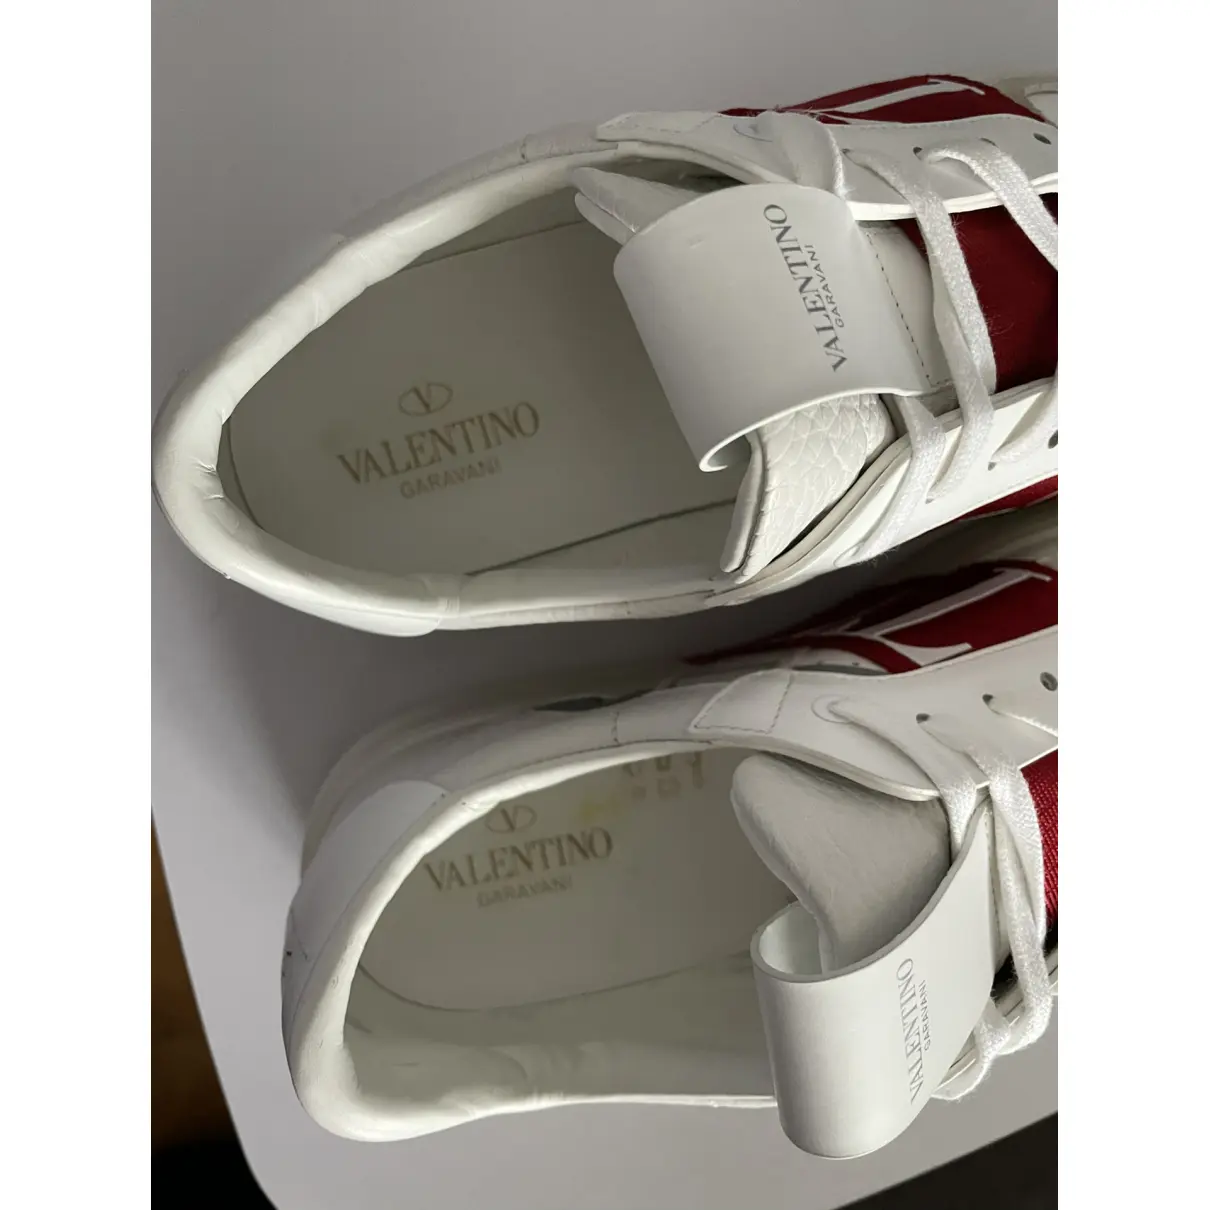 Buy Valentino Garavani Leather low trainers online